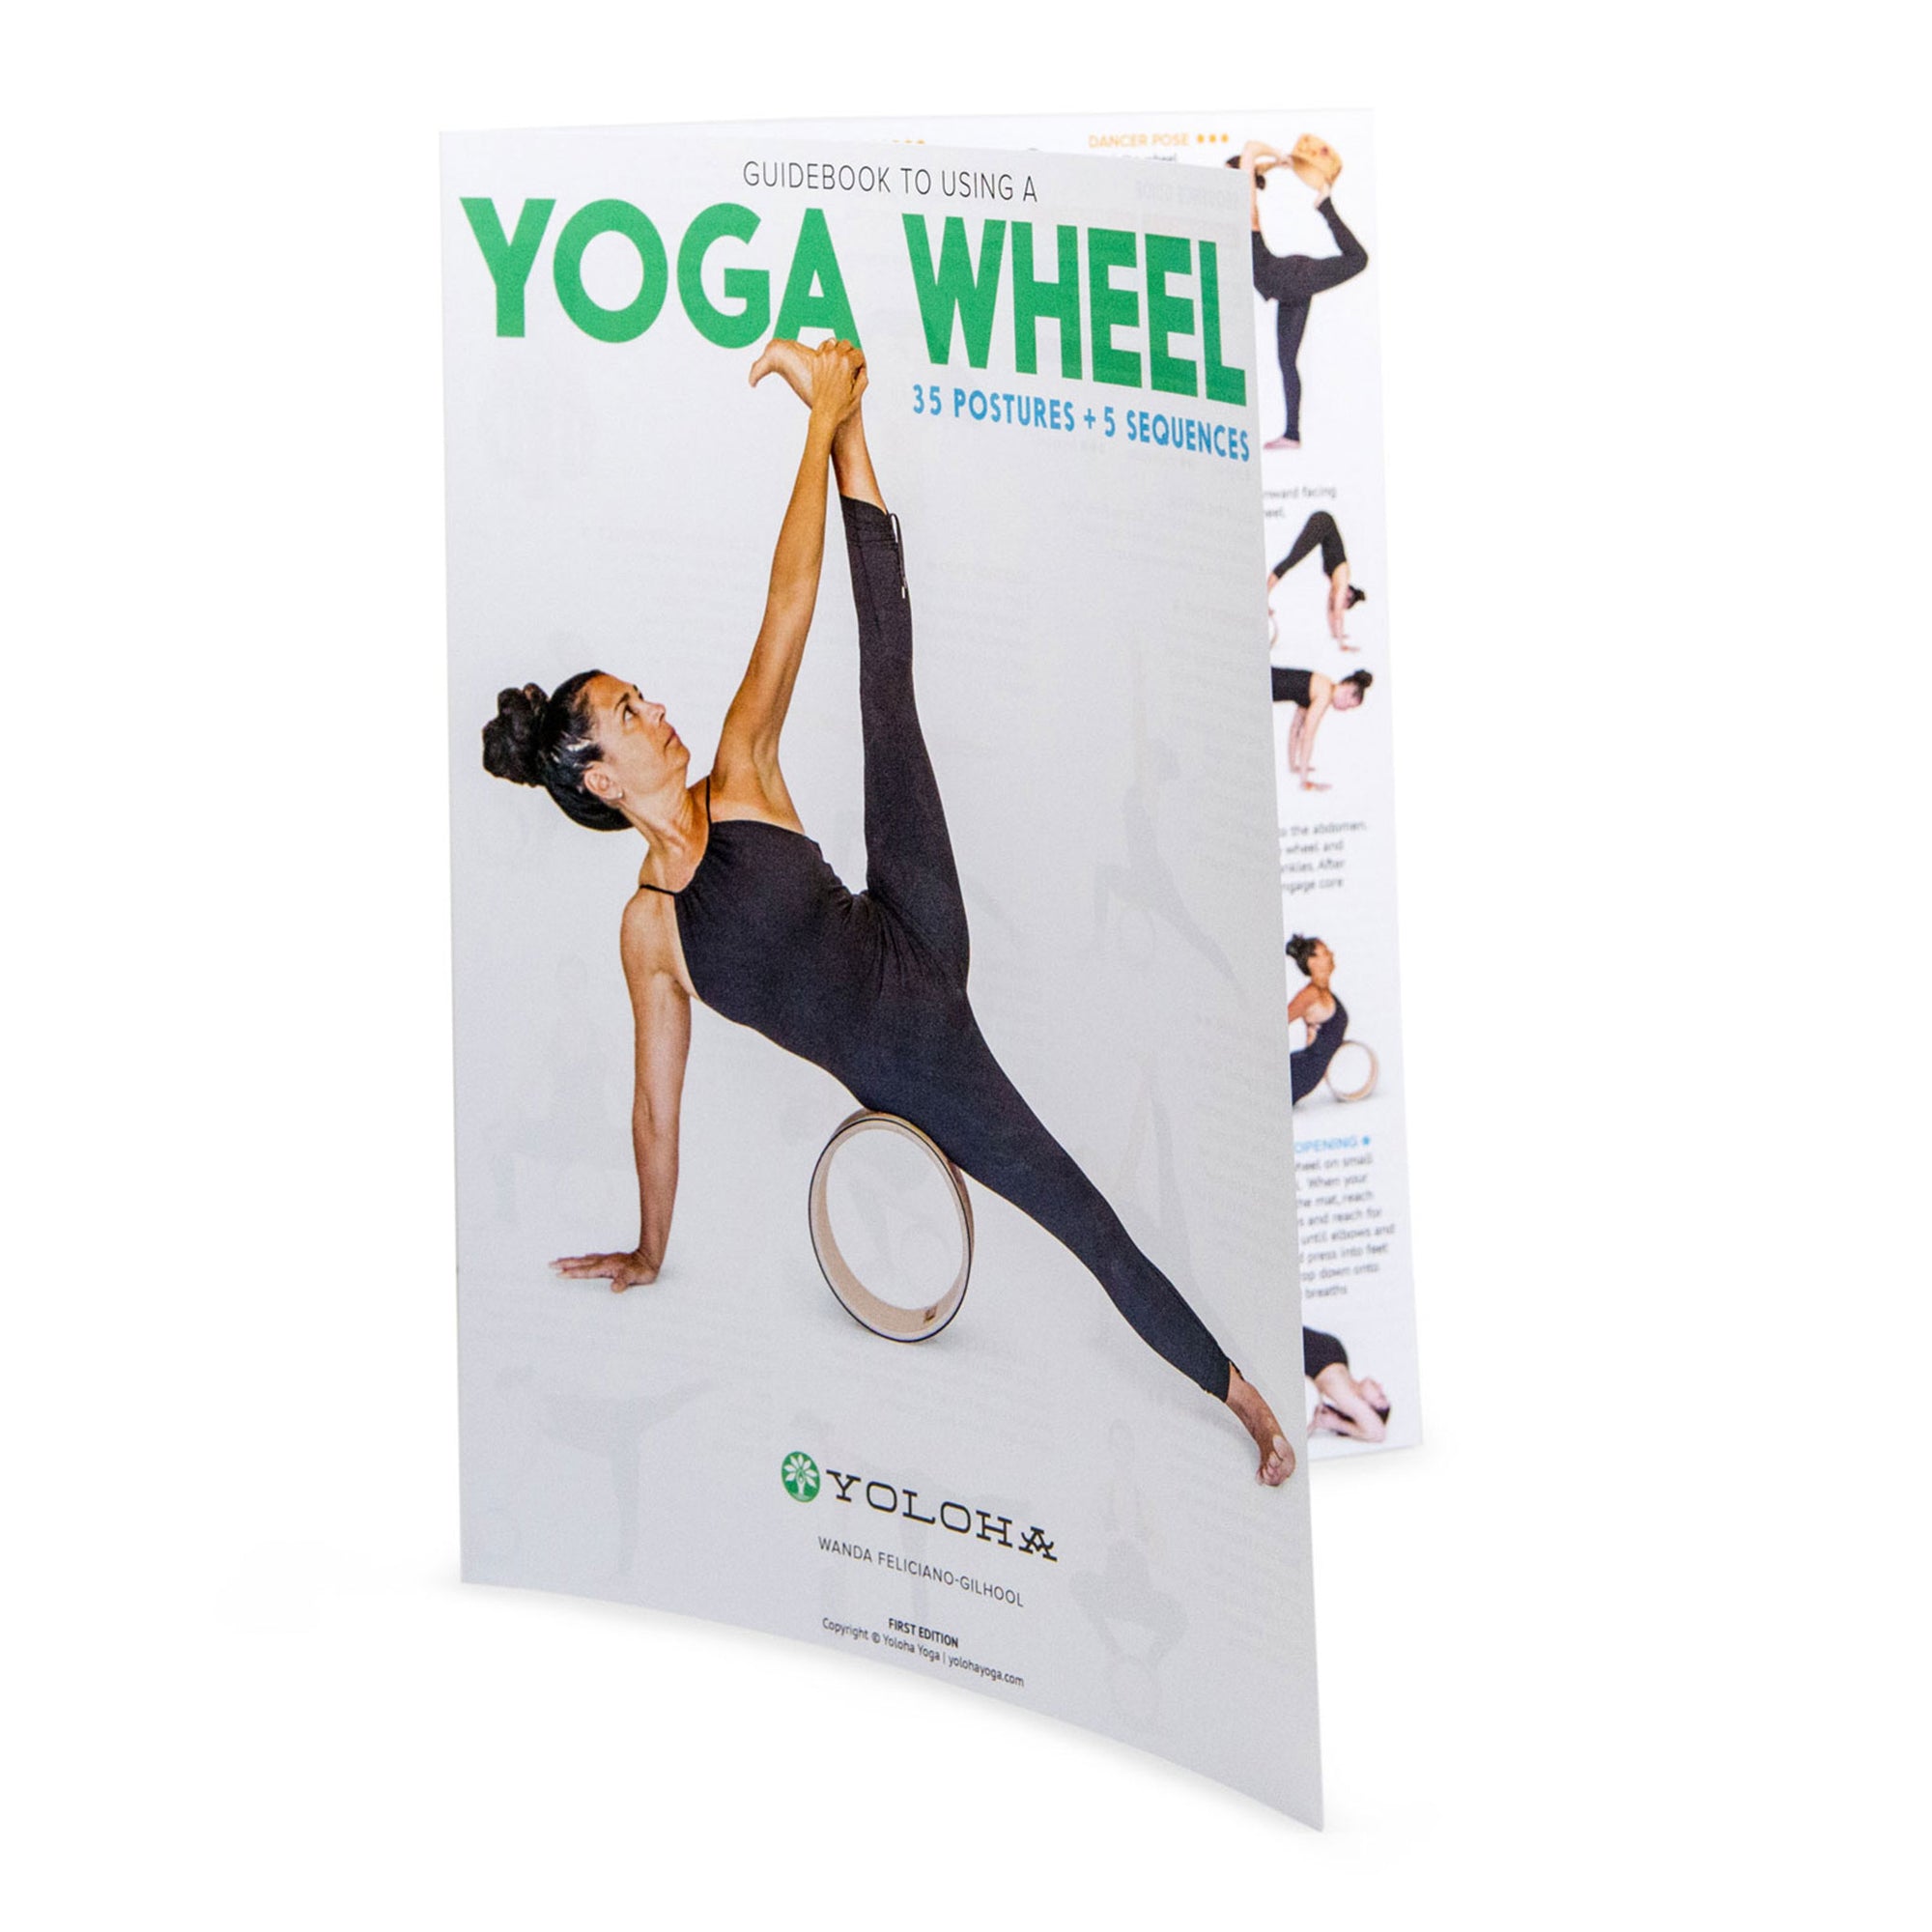 Yoga Mats & Accessories: Average savings of 35% at Sierra